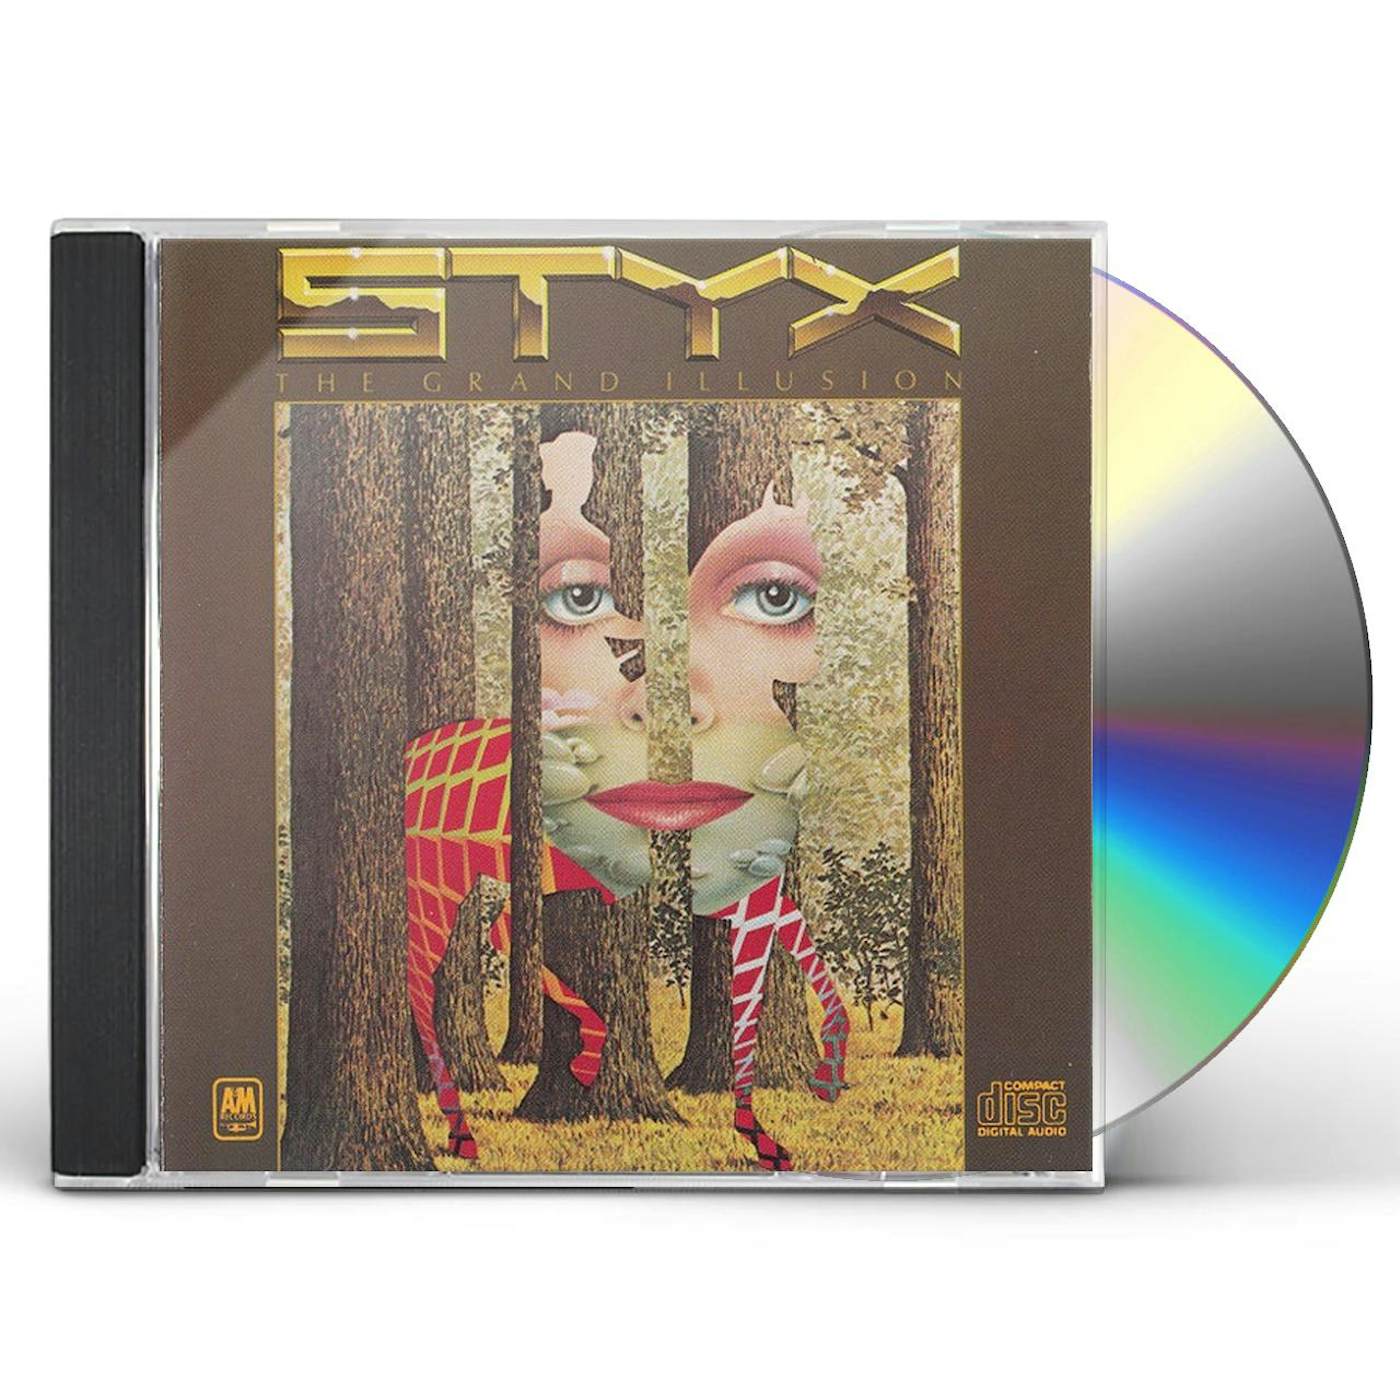 The Grand Illusion - Album by Styx